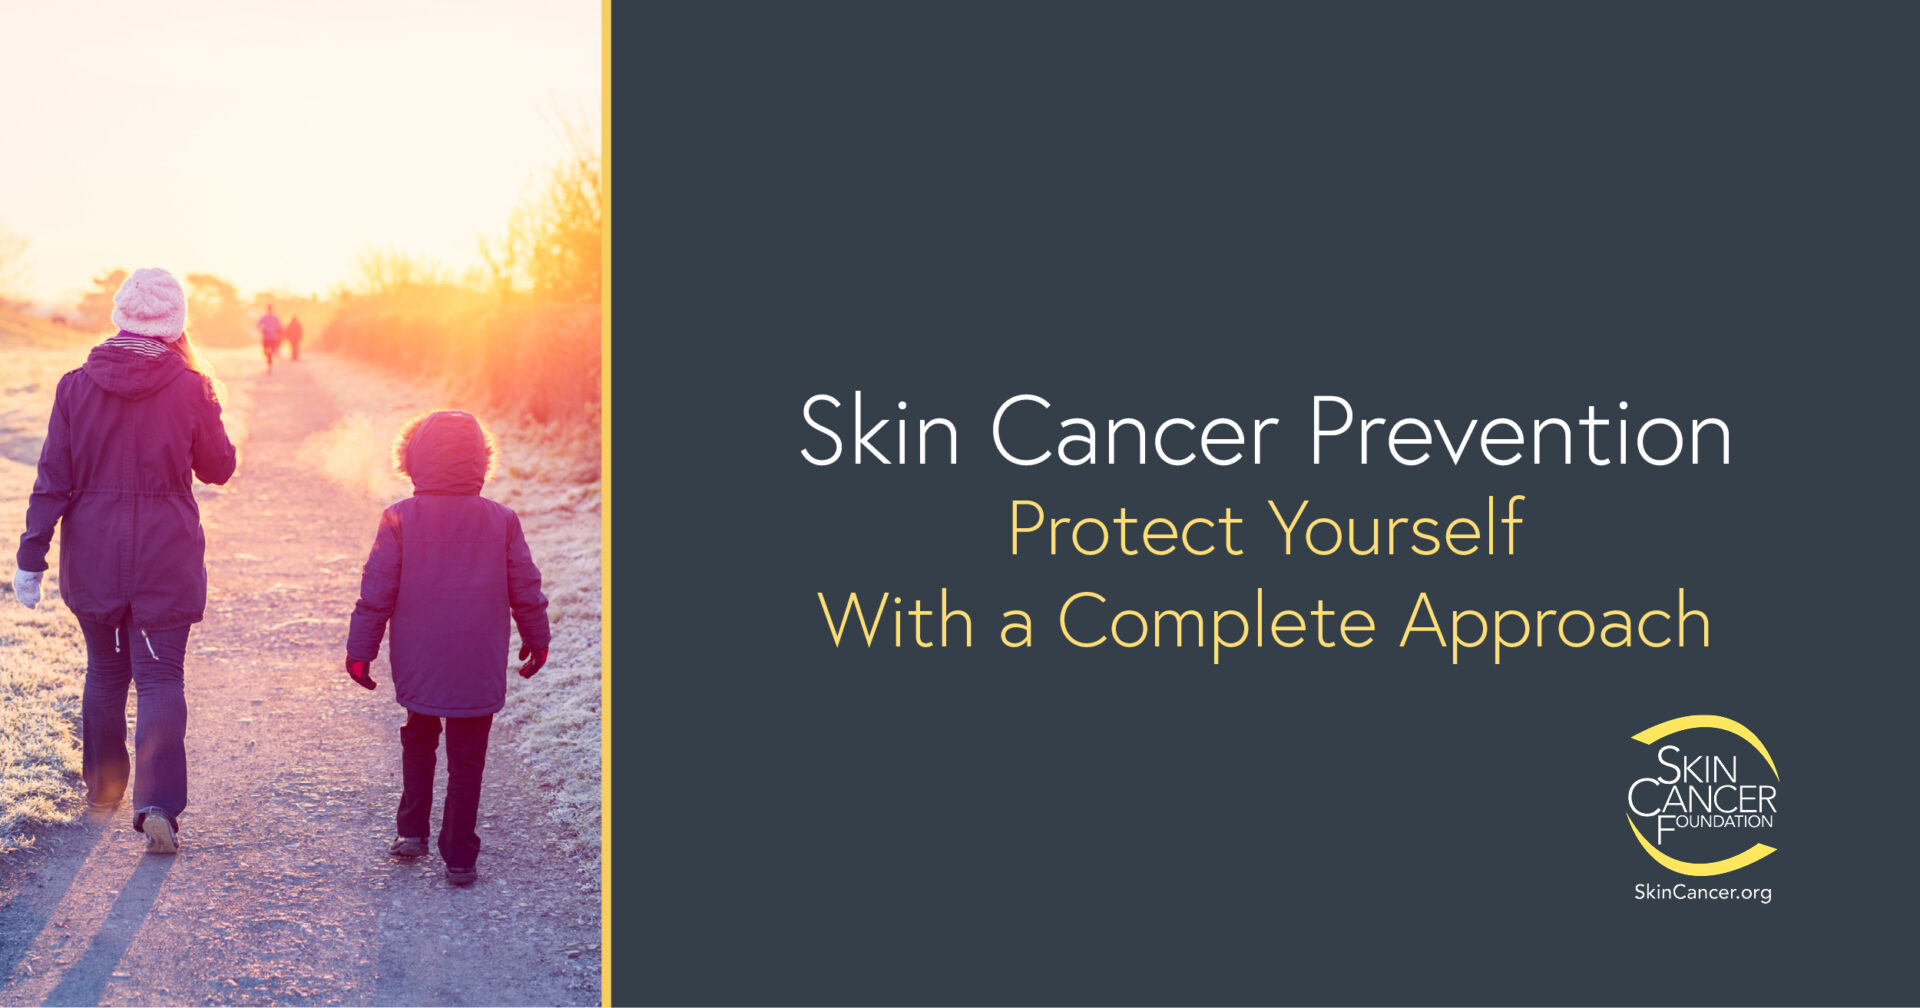 Skin Cancer Prevention The Skin Cancer Foundation